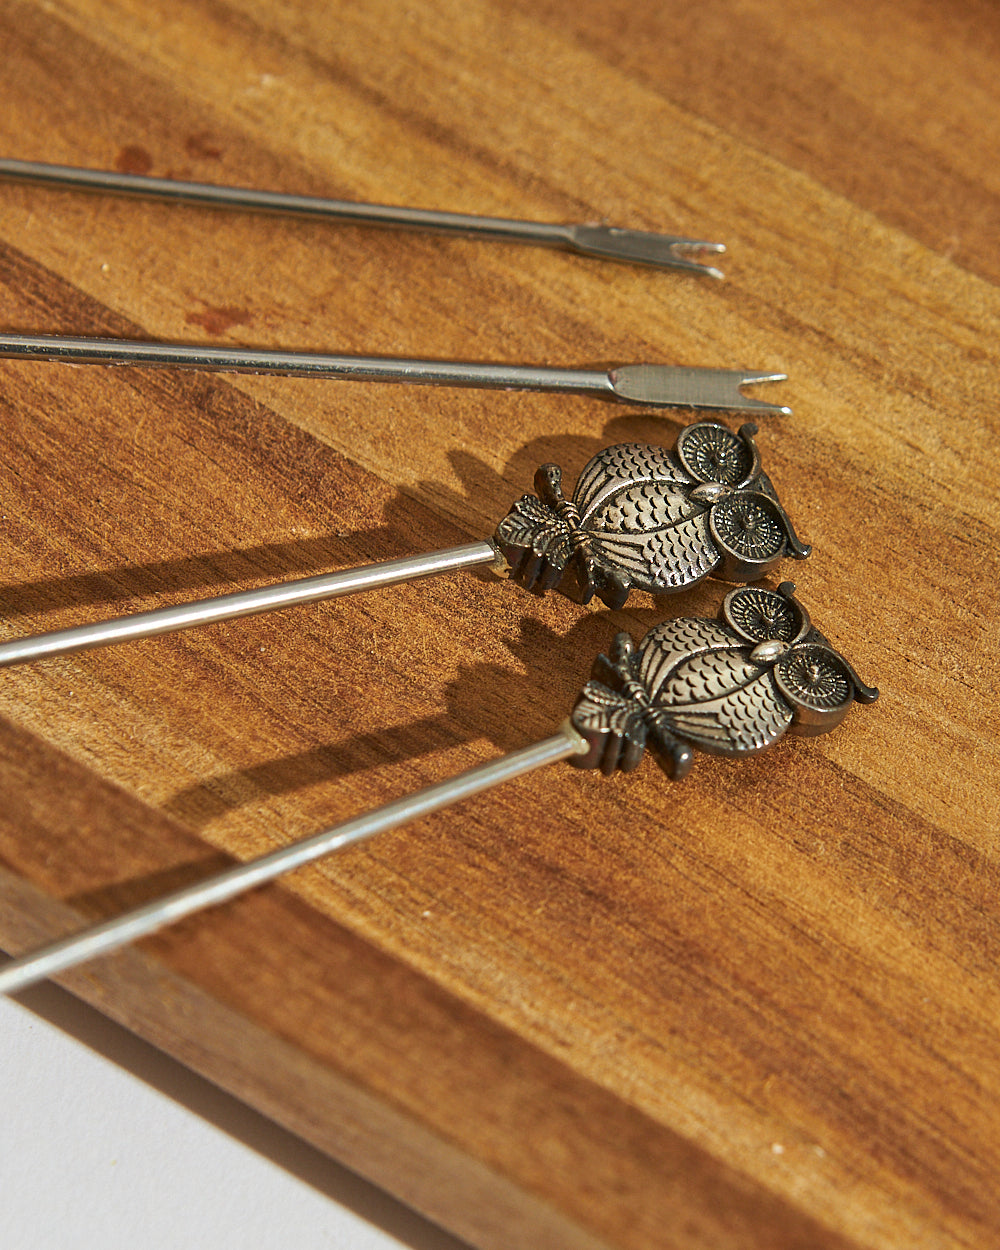 Wooden Rectangular Platter & Skewer Set - Owl